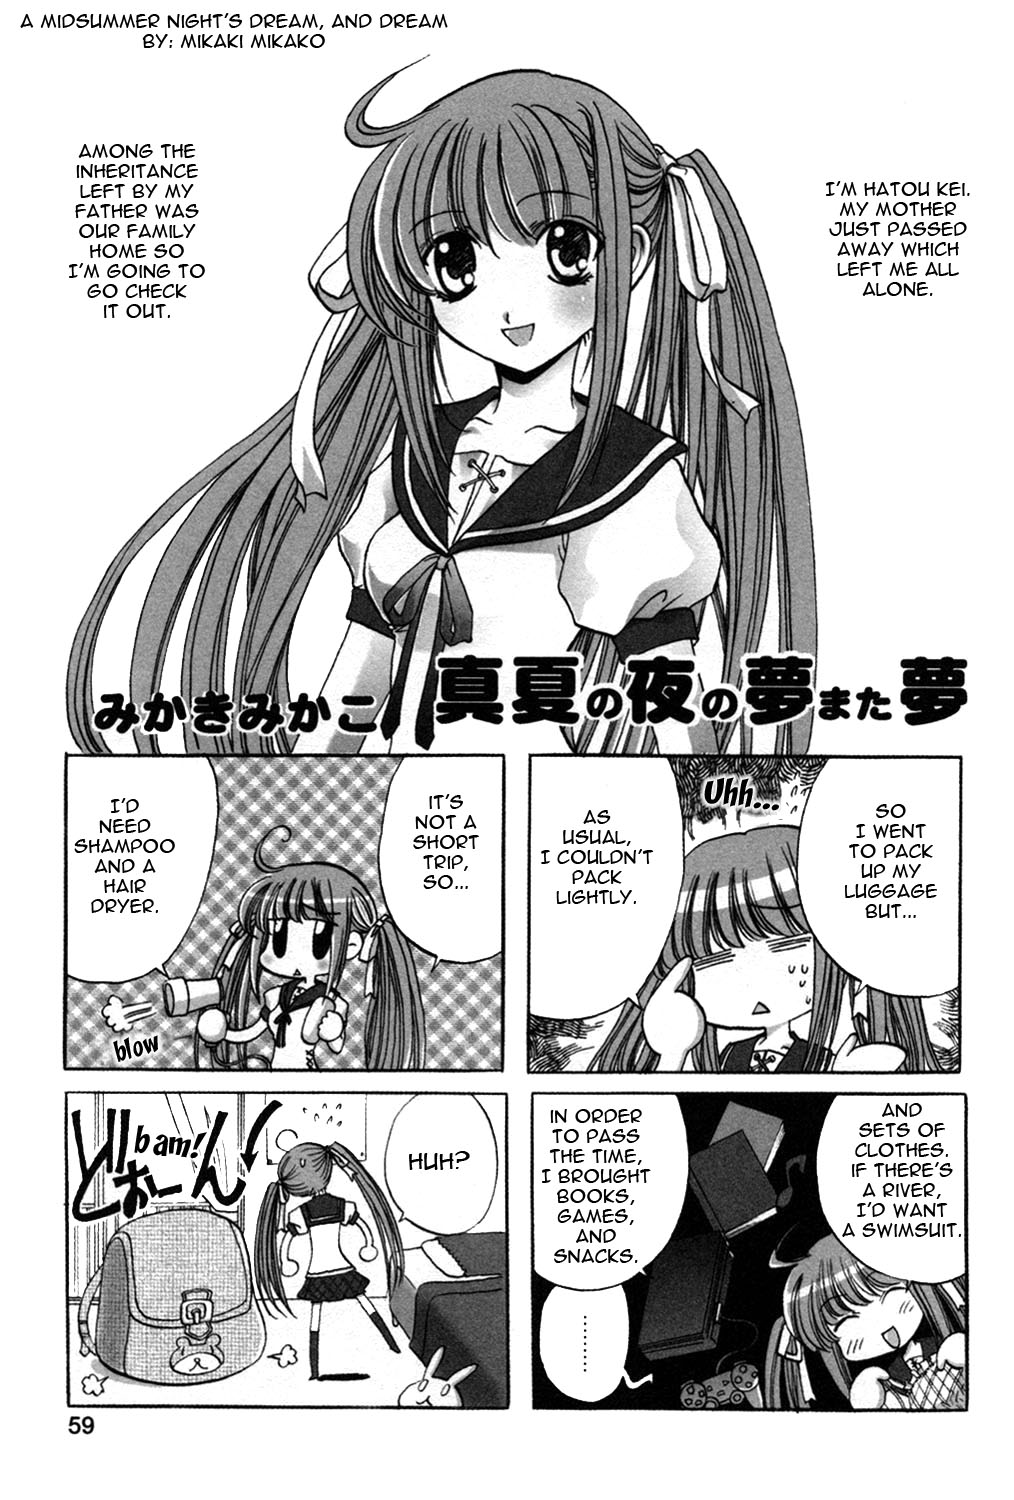 Akaiito Anthology Comic Vol. 1 Ch. 8 A Midsummer Night's Dream, and Dream (by Mikaki Mikako)